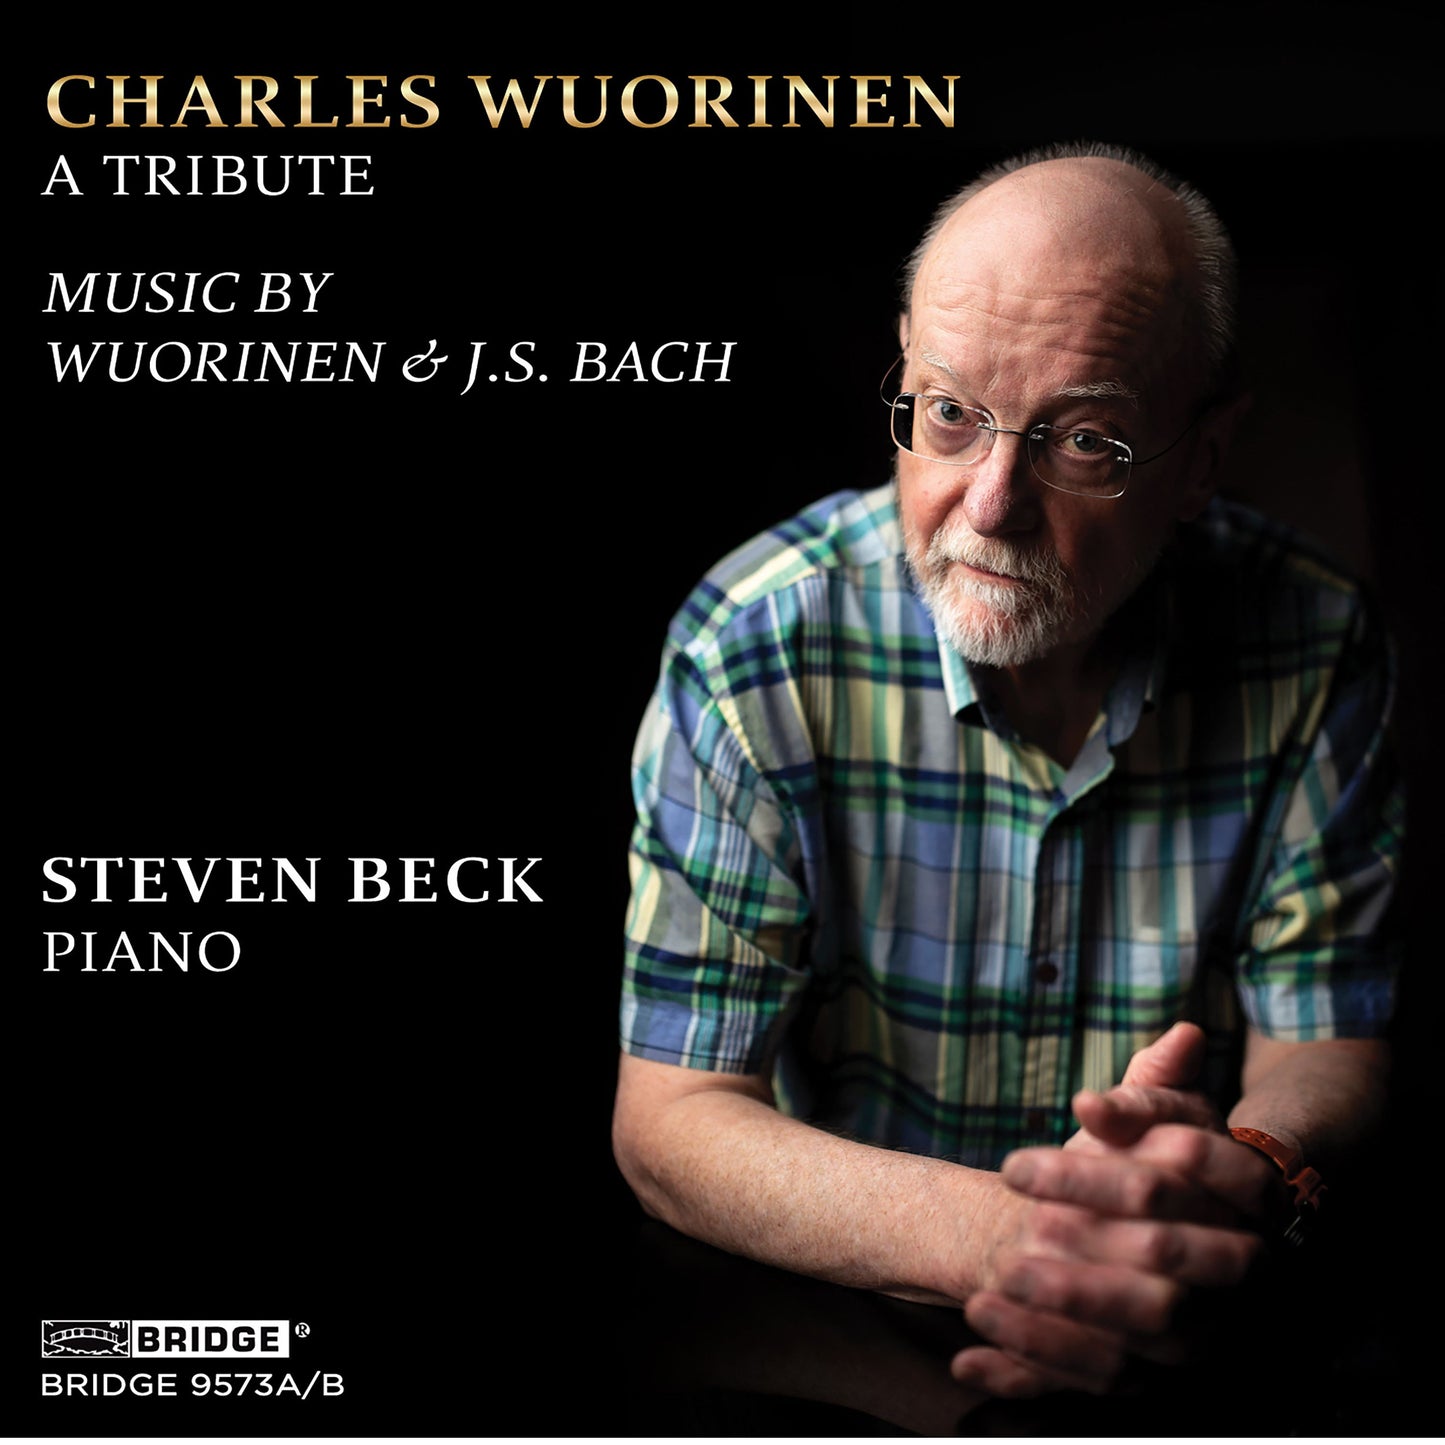 Wuorinen & J.S. Bach: A Tribute